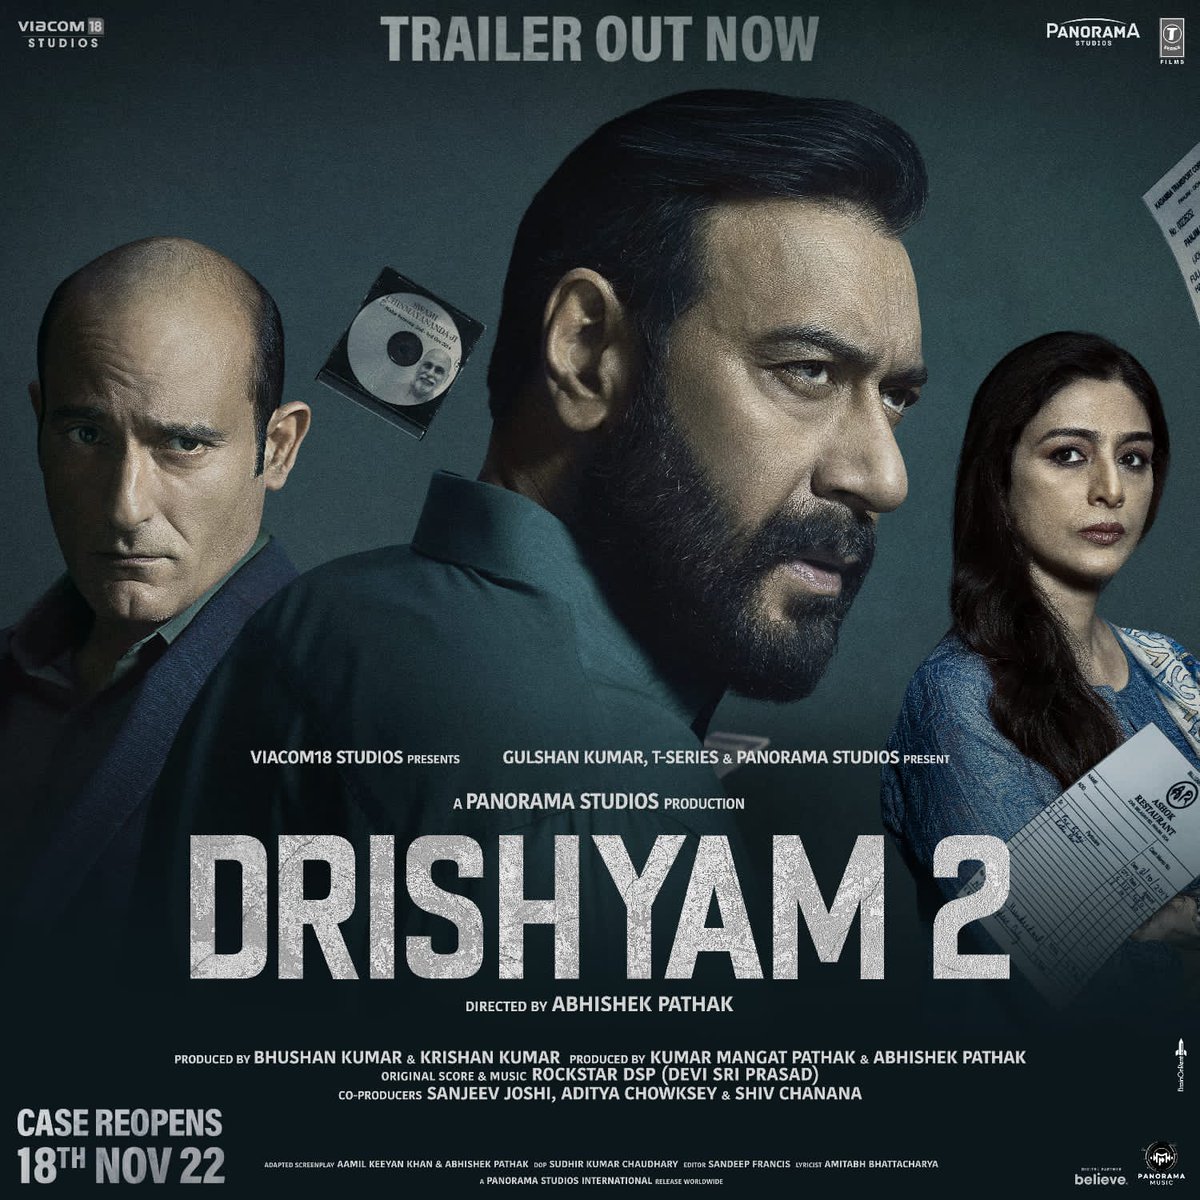 Ajay devgn in full fire mood 🔥🔥
Drushyam2 blockbuster
#Drishyam2Trailer #ajaydevgn